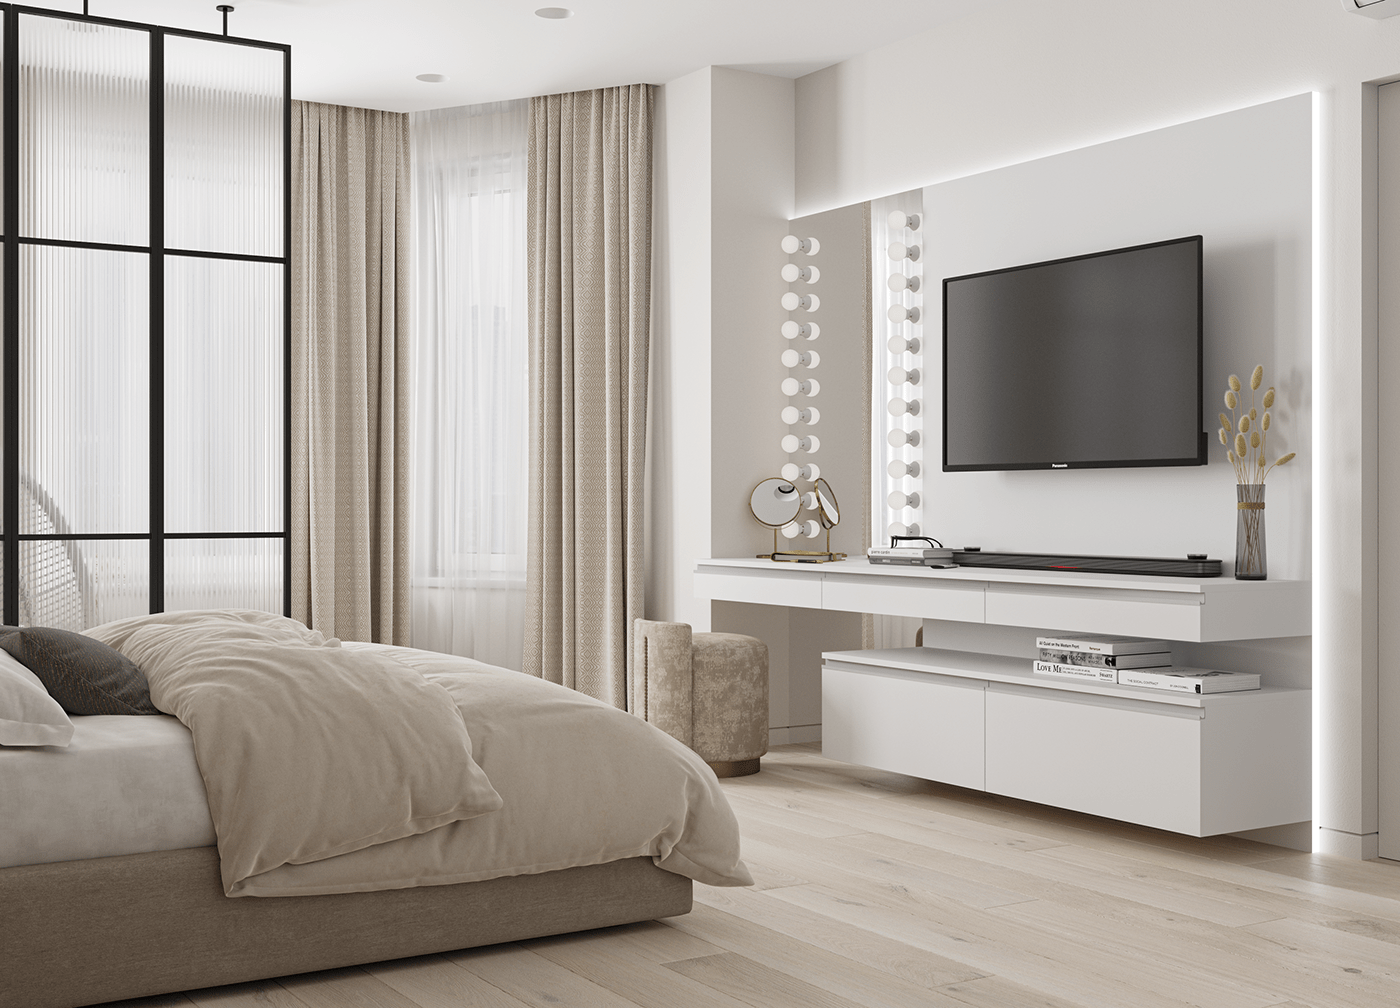 3ds max archviz bedroom black and white Interior monochrome Render visualization интерьер спальня